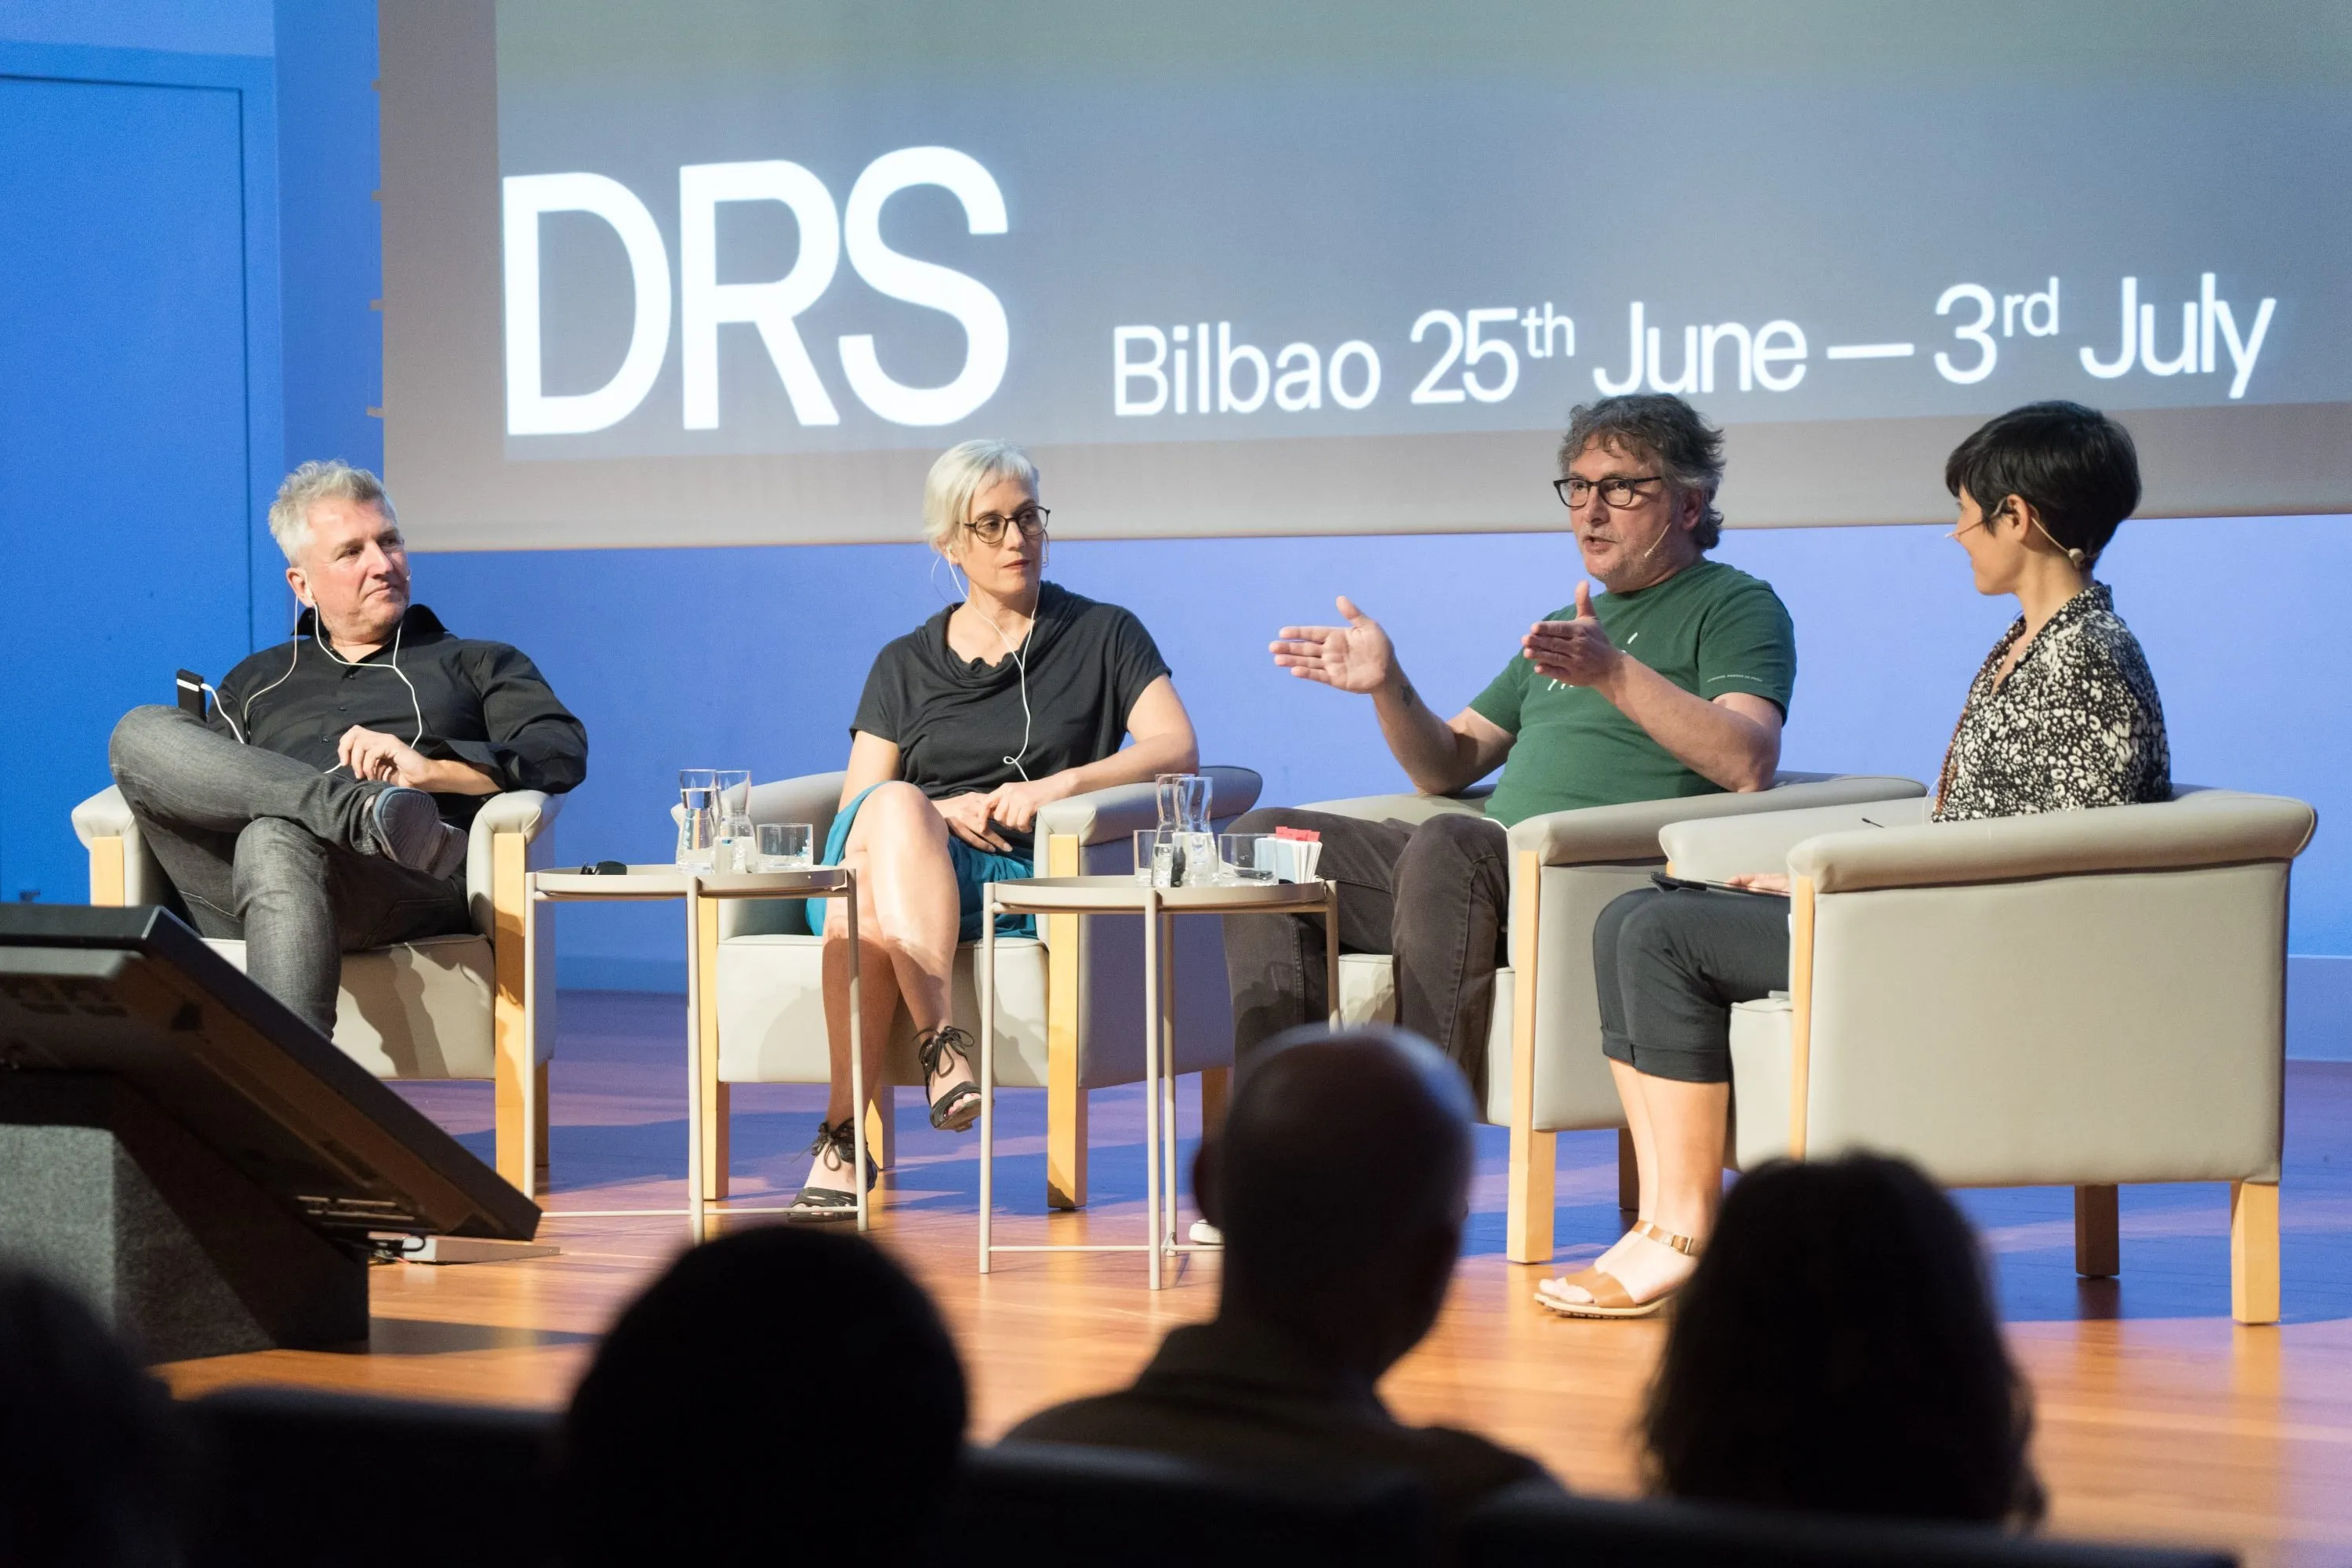 Silvana Juri moderating "Future Foods" keynote debate at the DRS22 Conference in Bilbao Spain (July 2022)